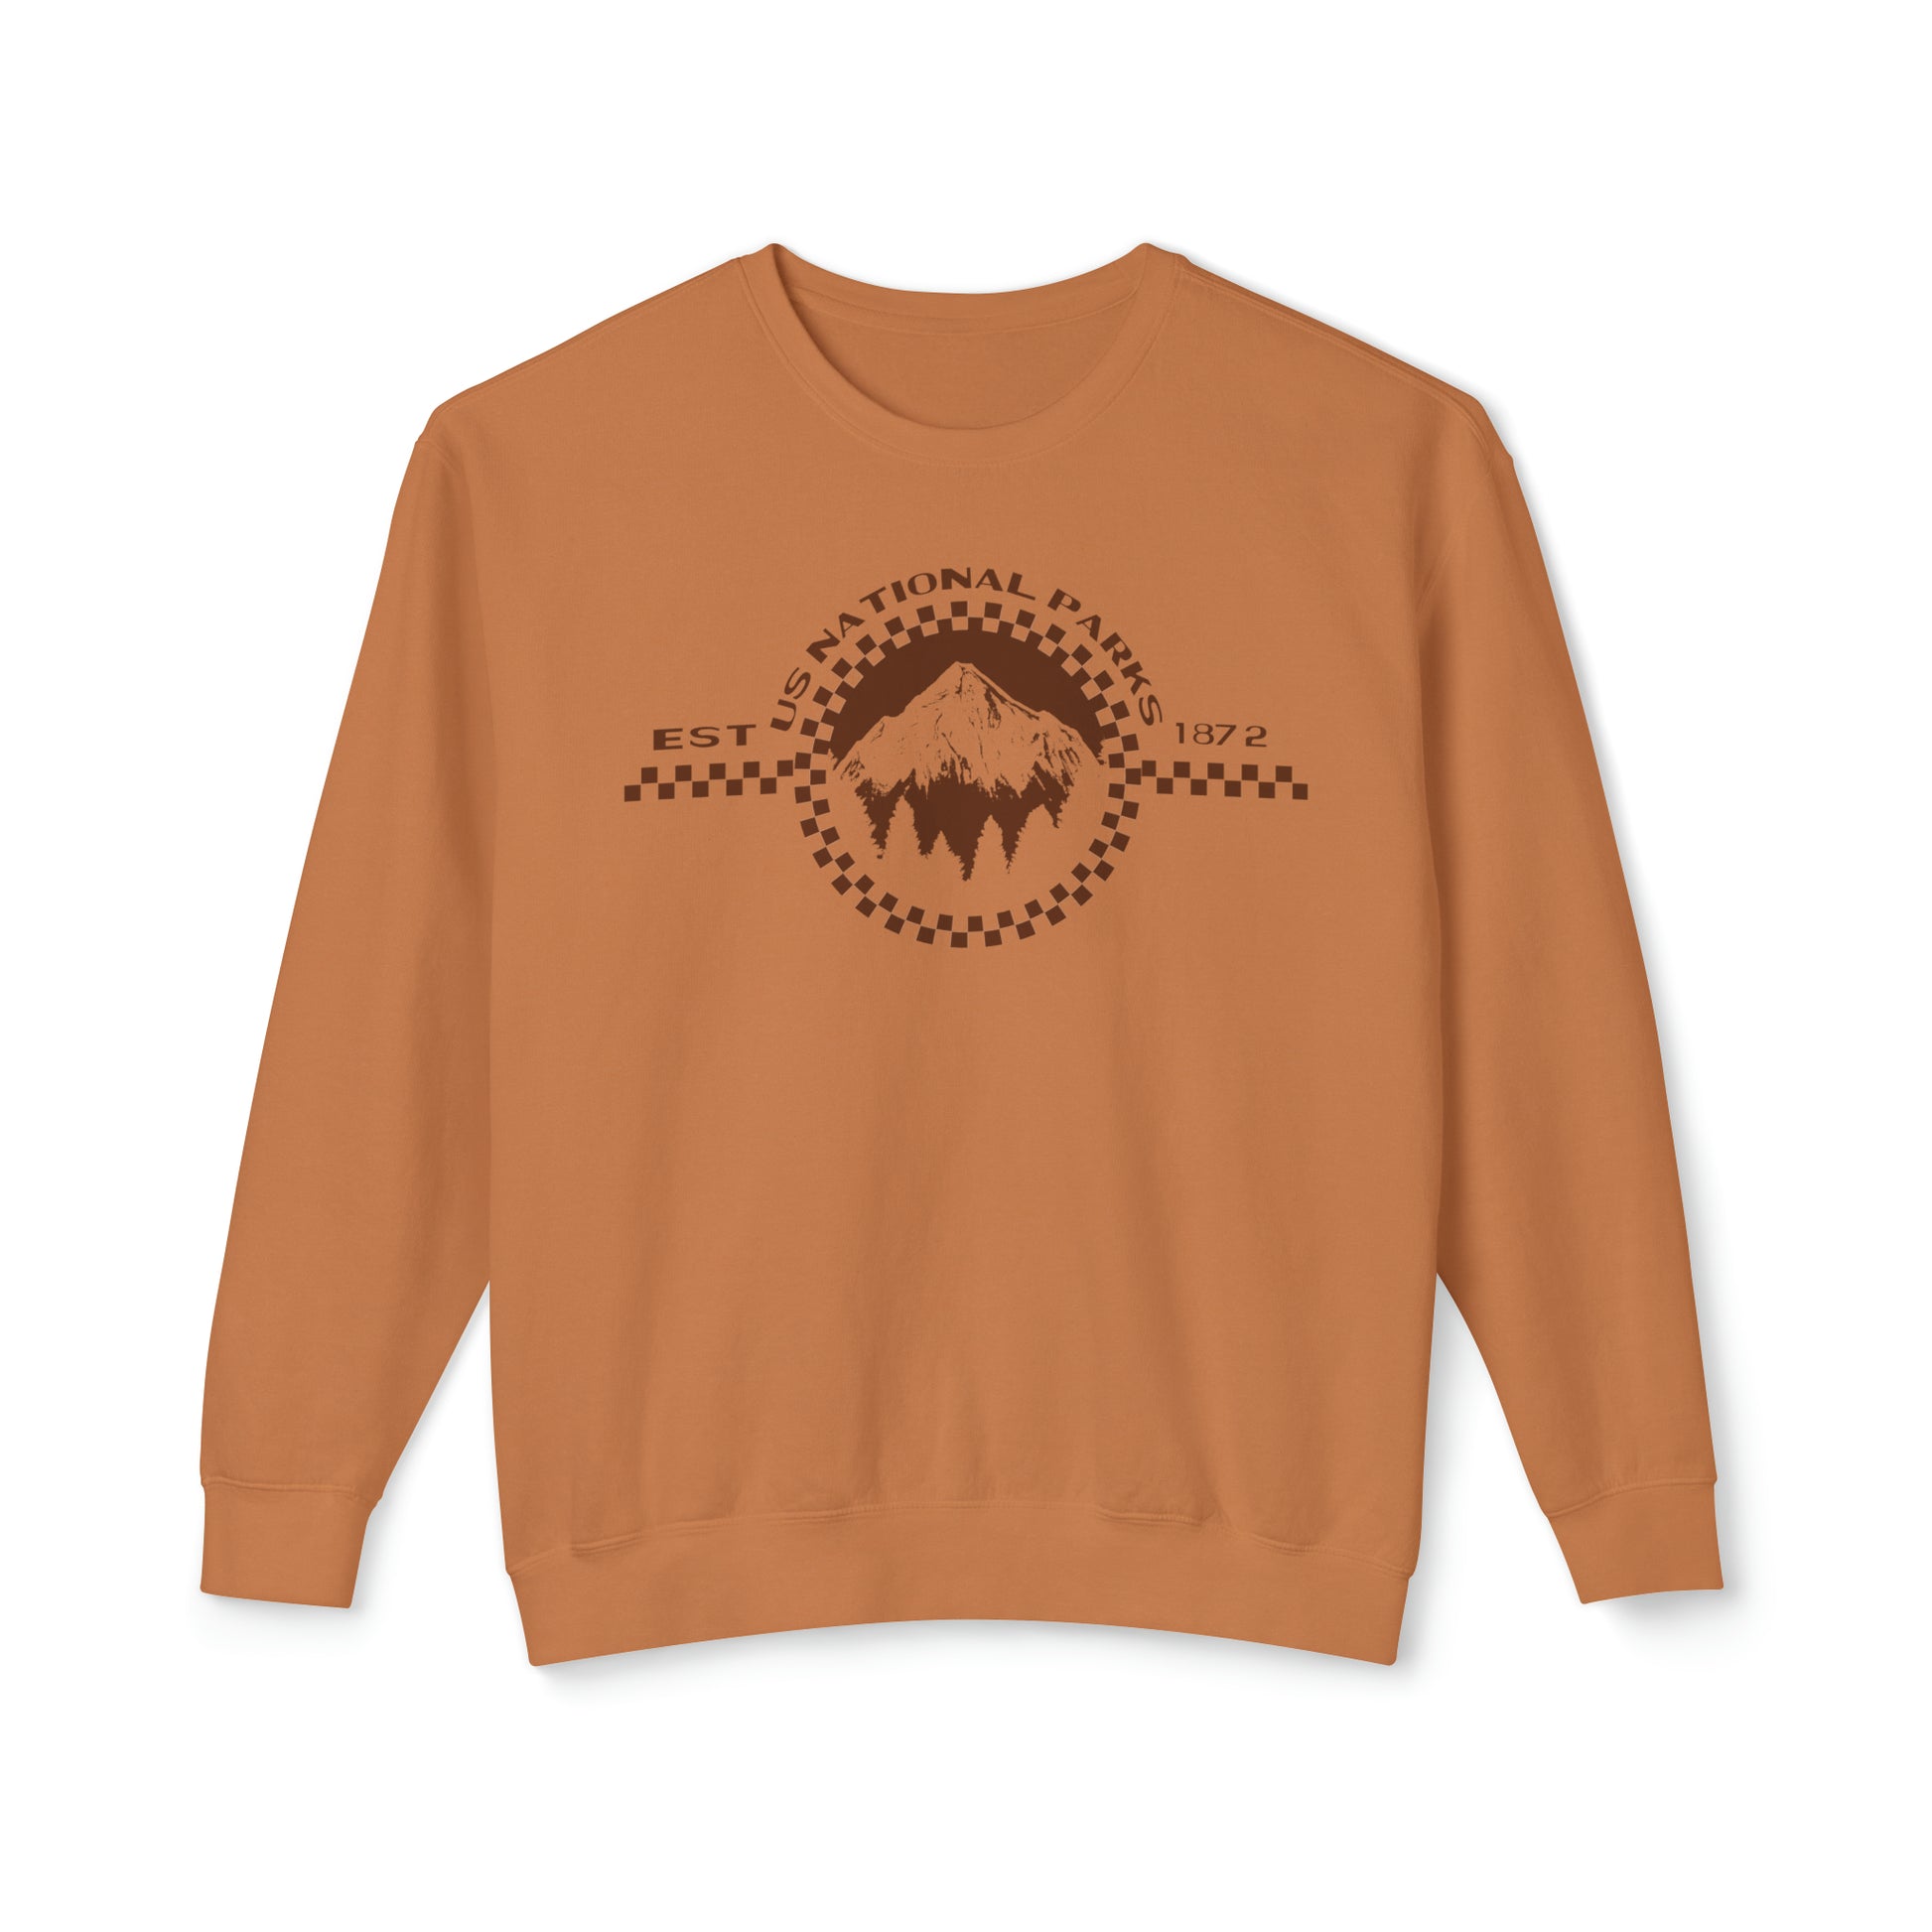 Checkered National Parks Sweatshirt